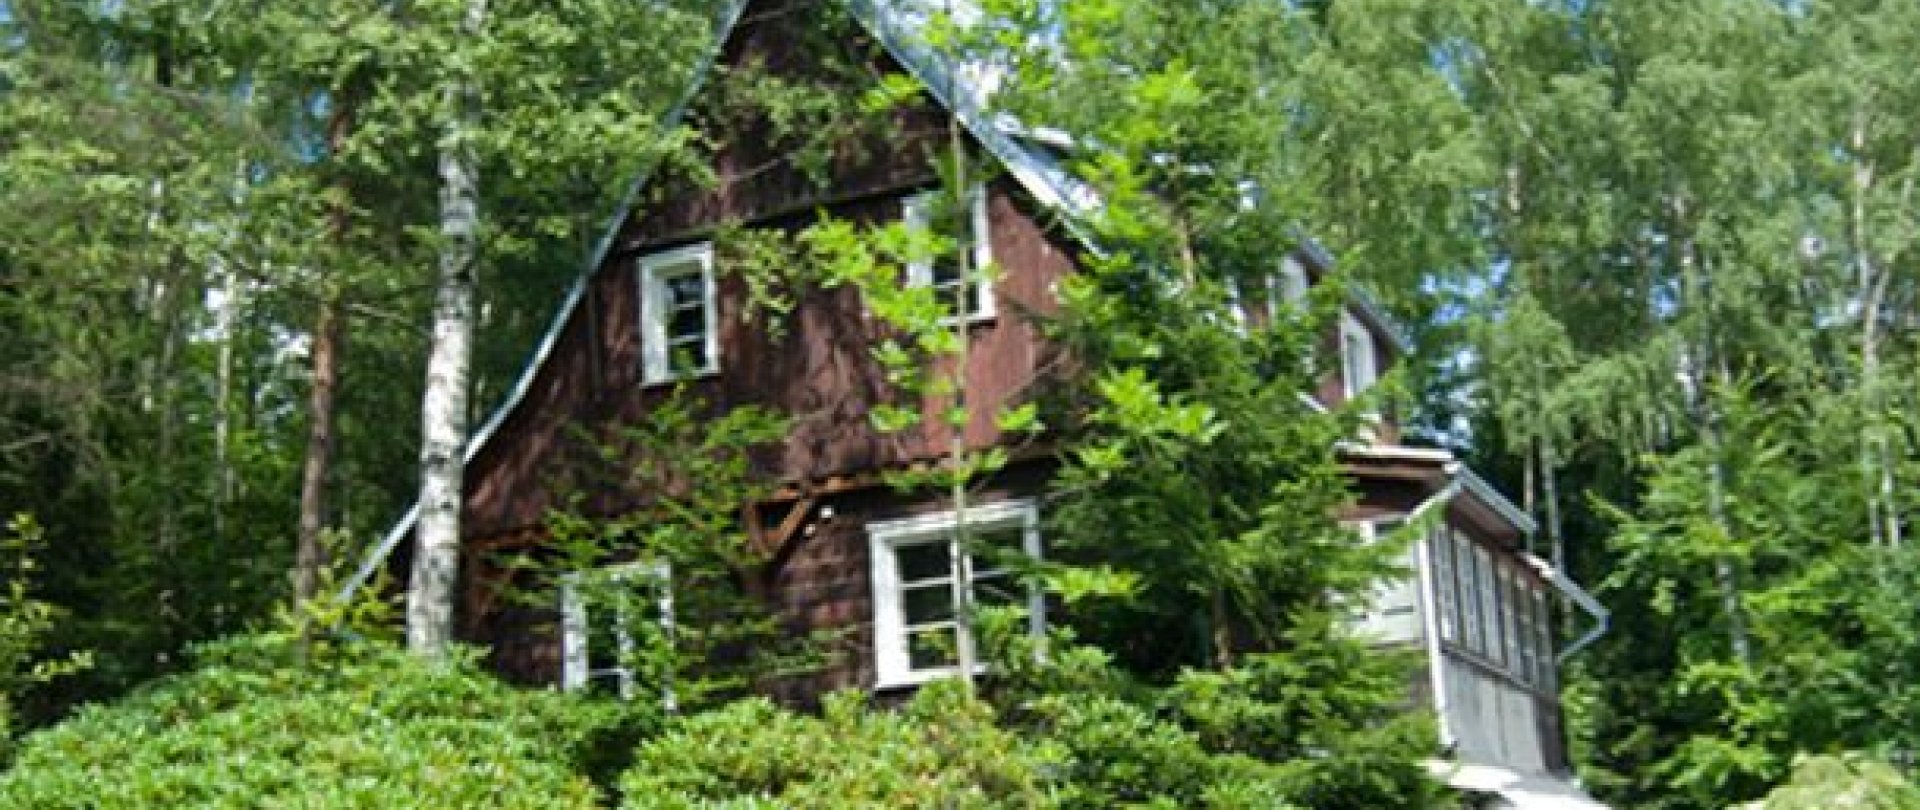 Dom malarza Wlastimila Hofmana 